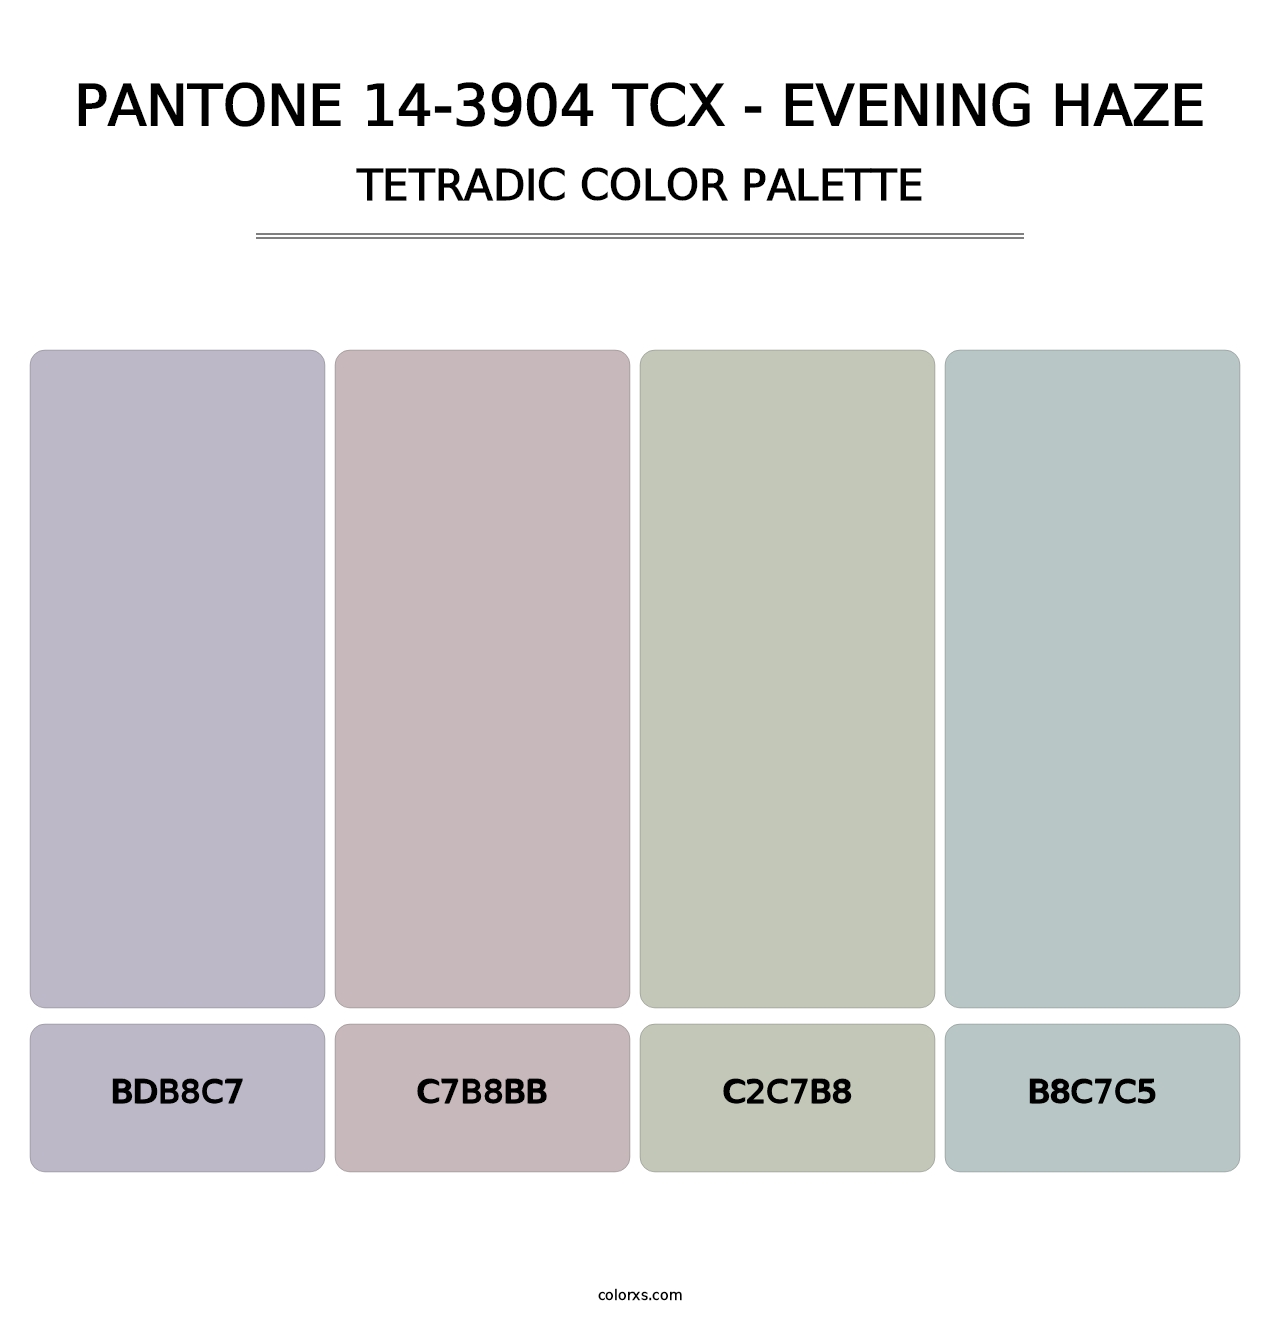 PANTONE 14-3904 TCX - Evening Haze - Tetradic Color Palette